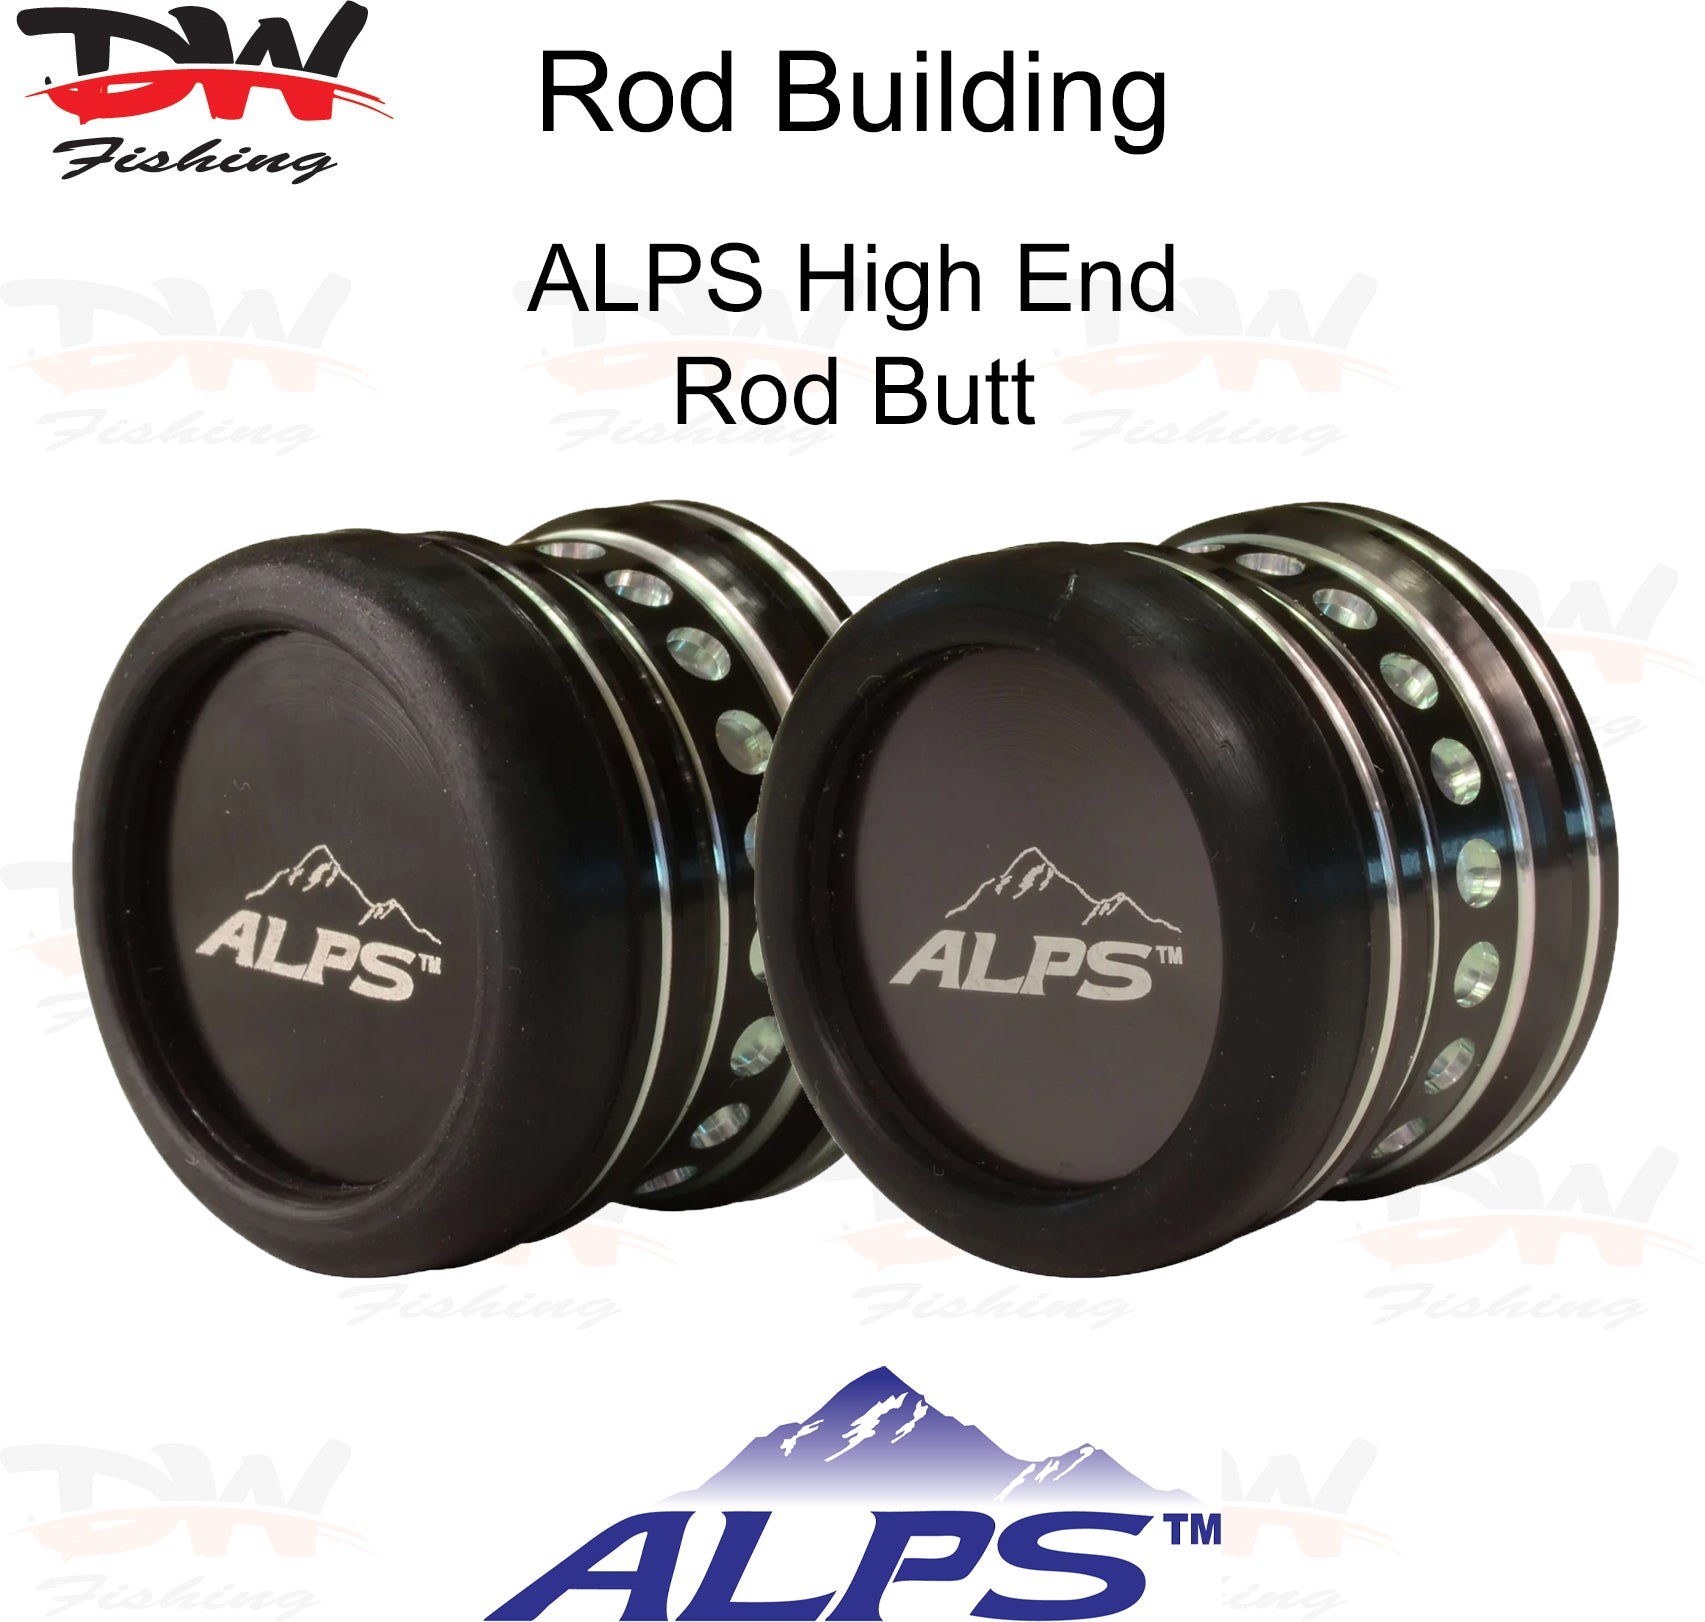 ALPS high end rod butt cap 2 butt caps with ALPS logo